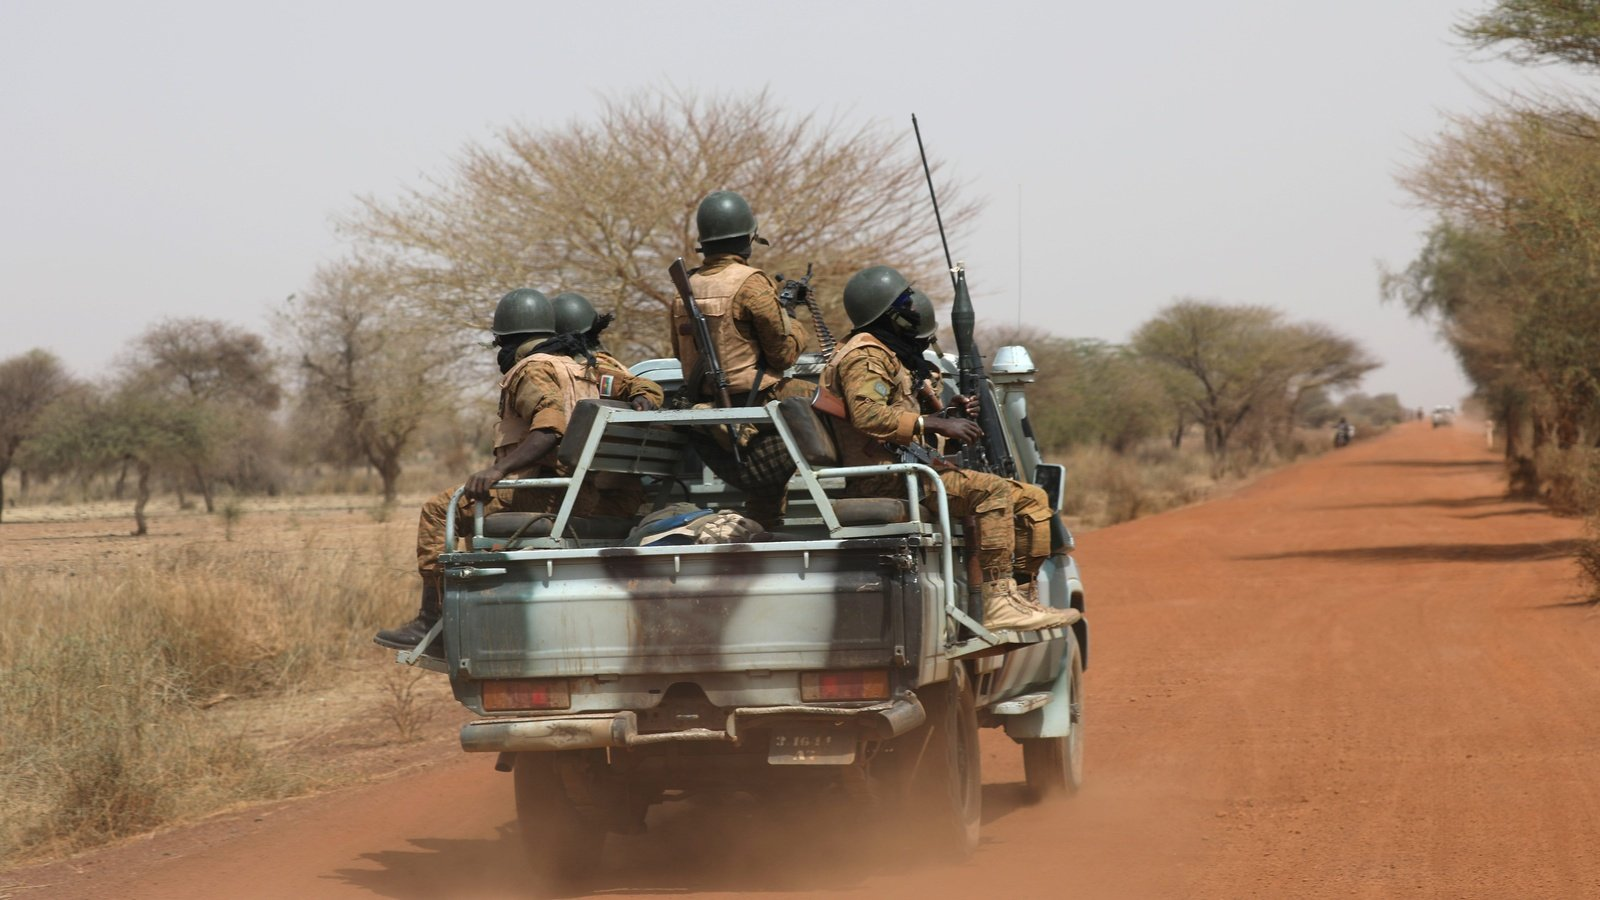 Unanswered Questions Swirl Following Burkina Faso Murders